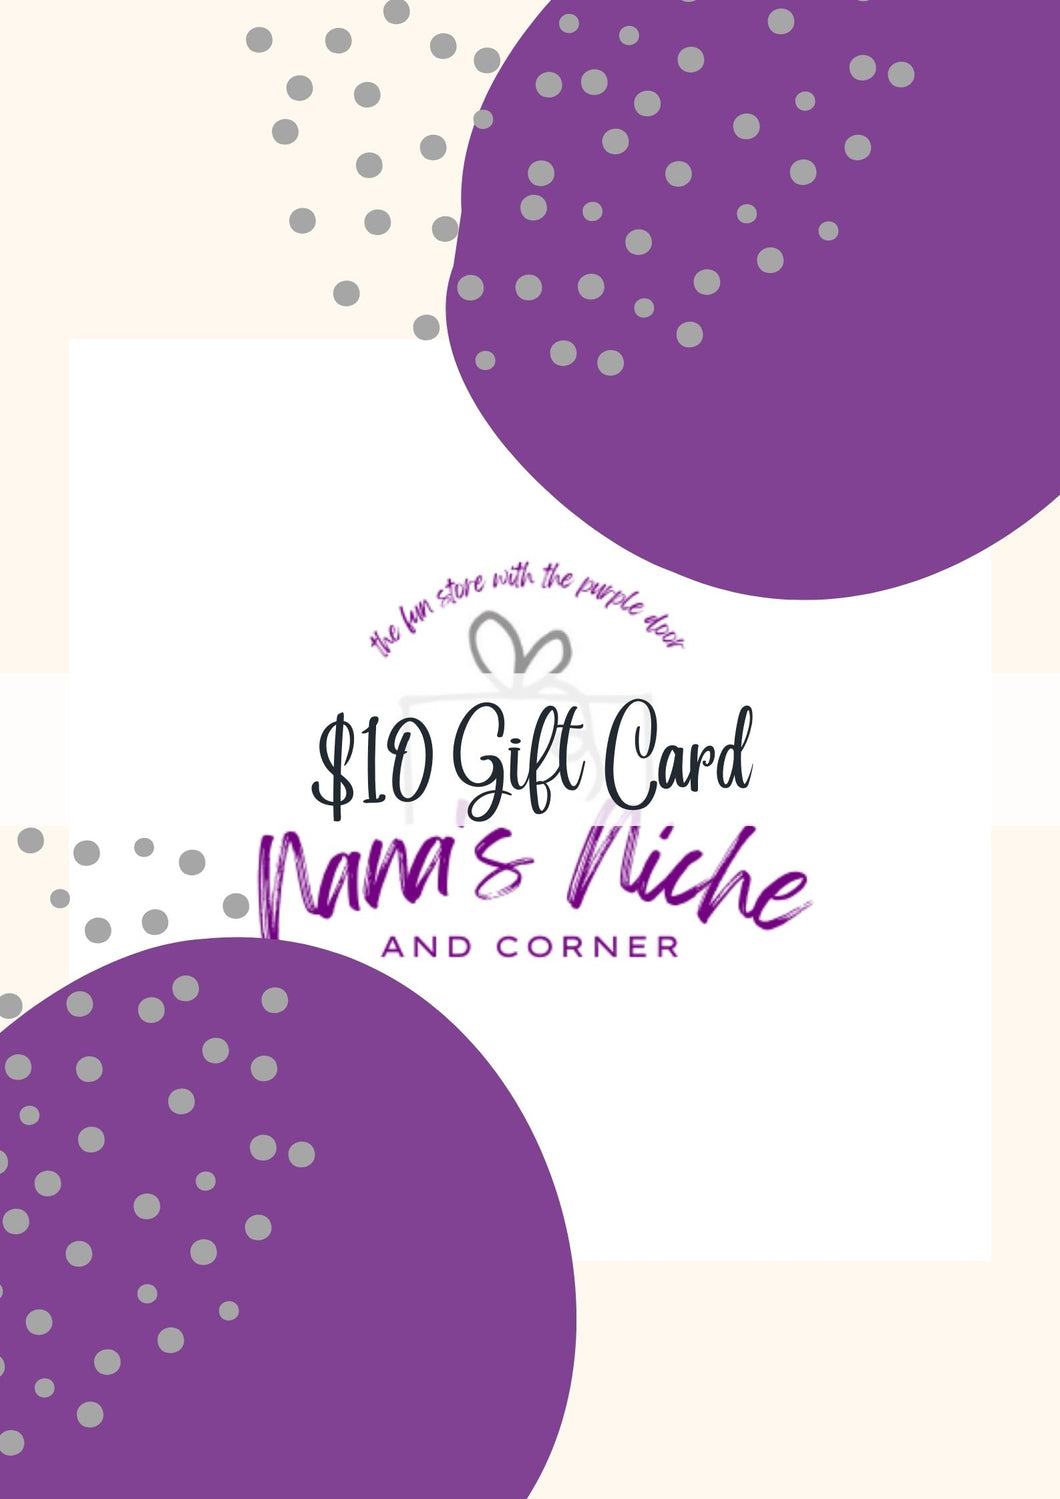 Nana's Niche Gift Card